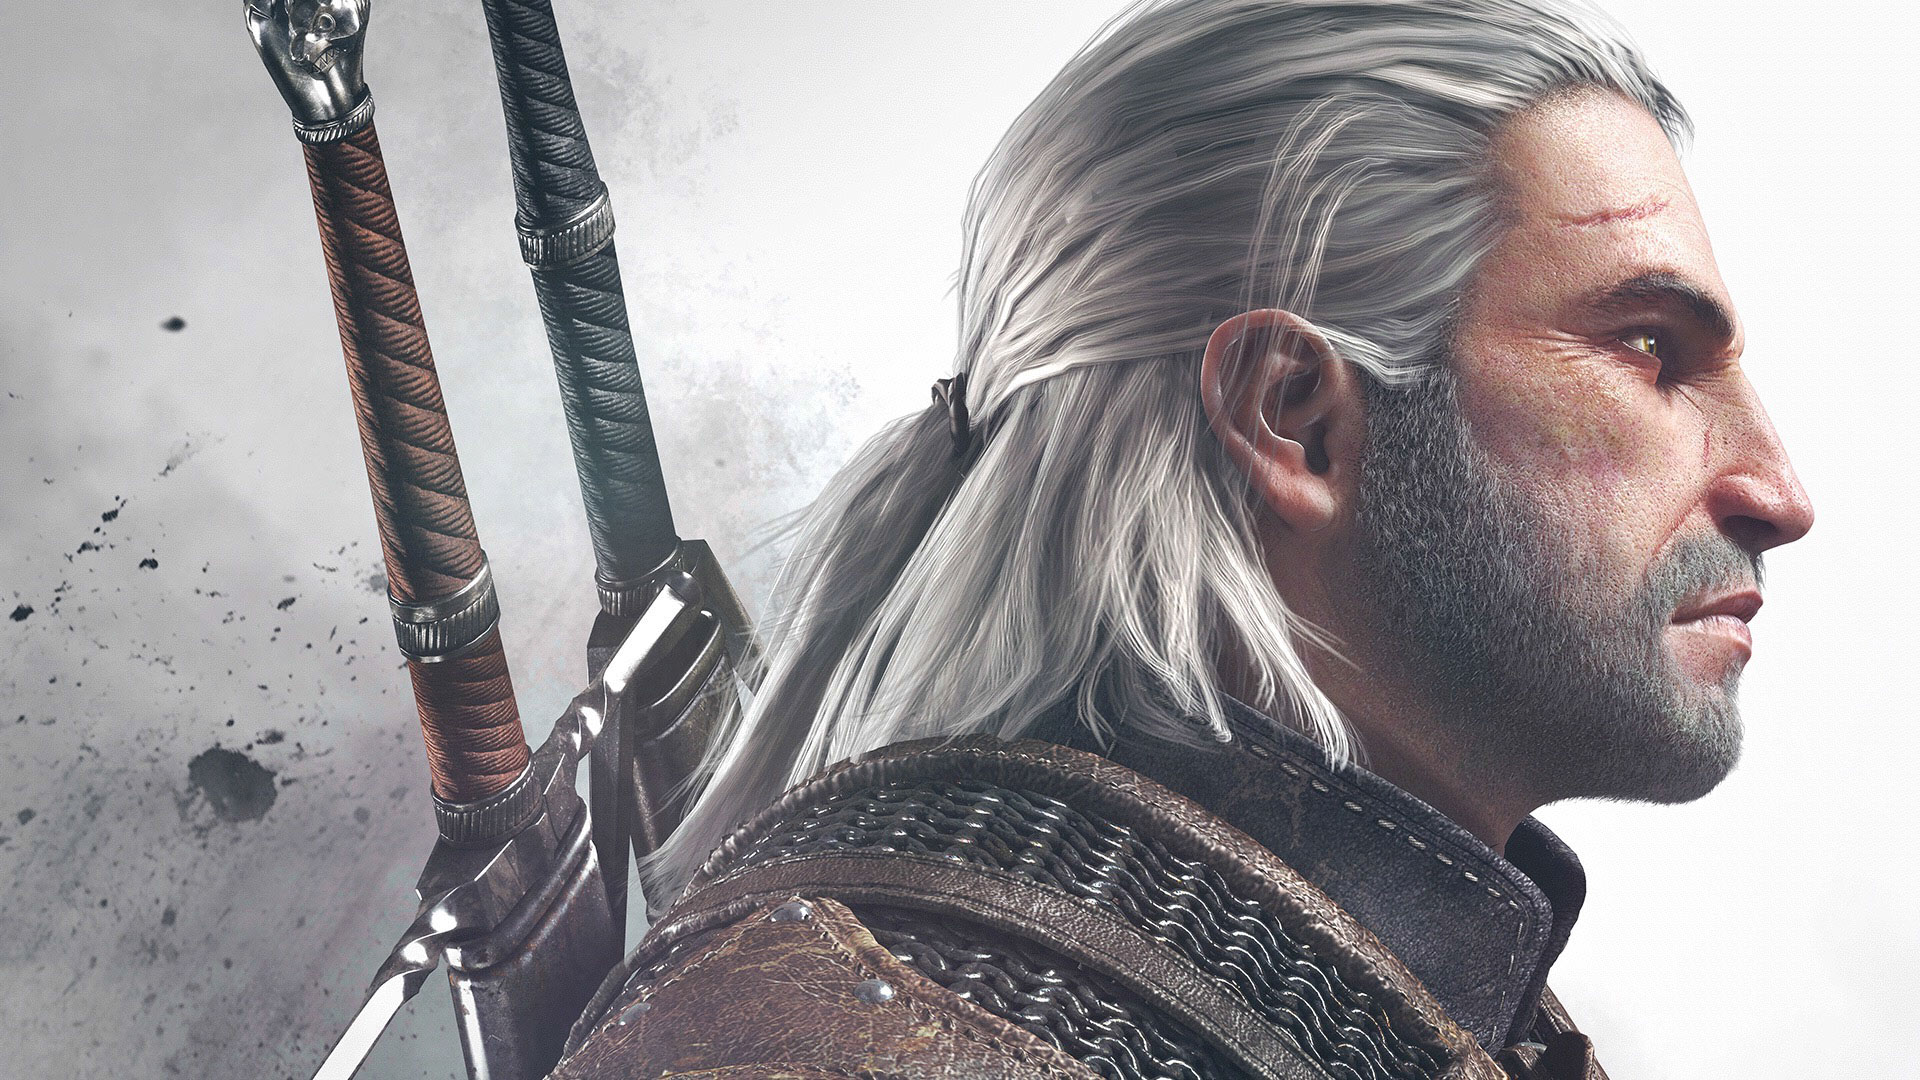 CD PROJEKT RED FANS: The Witcher 3: Wild Hunt - New Game + Disponível!  Entenda o que é